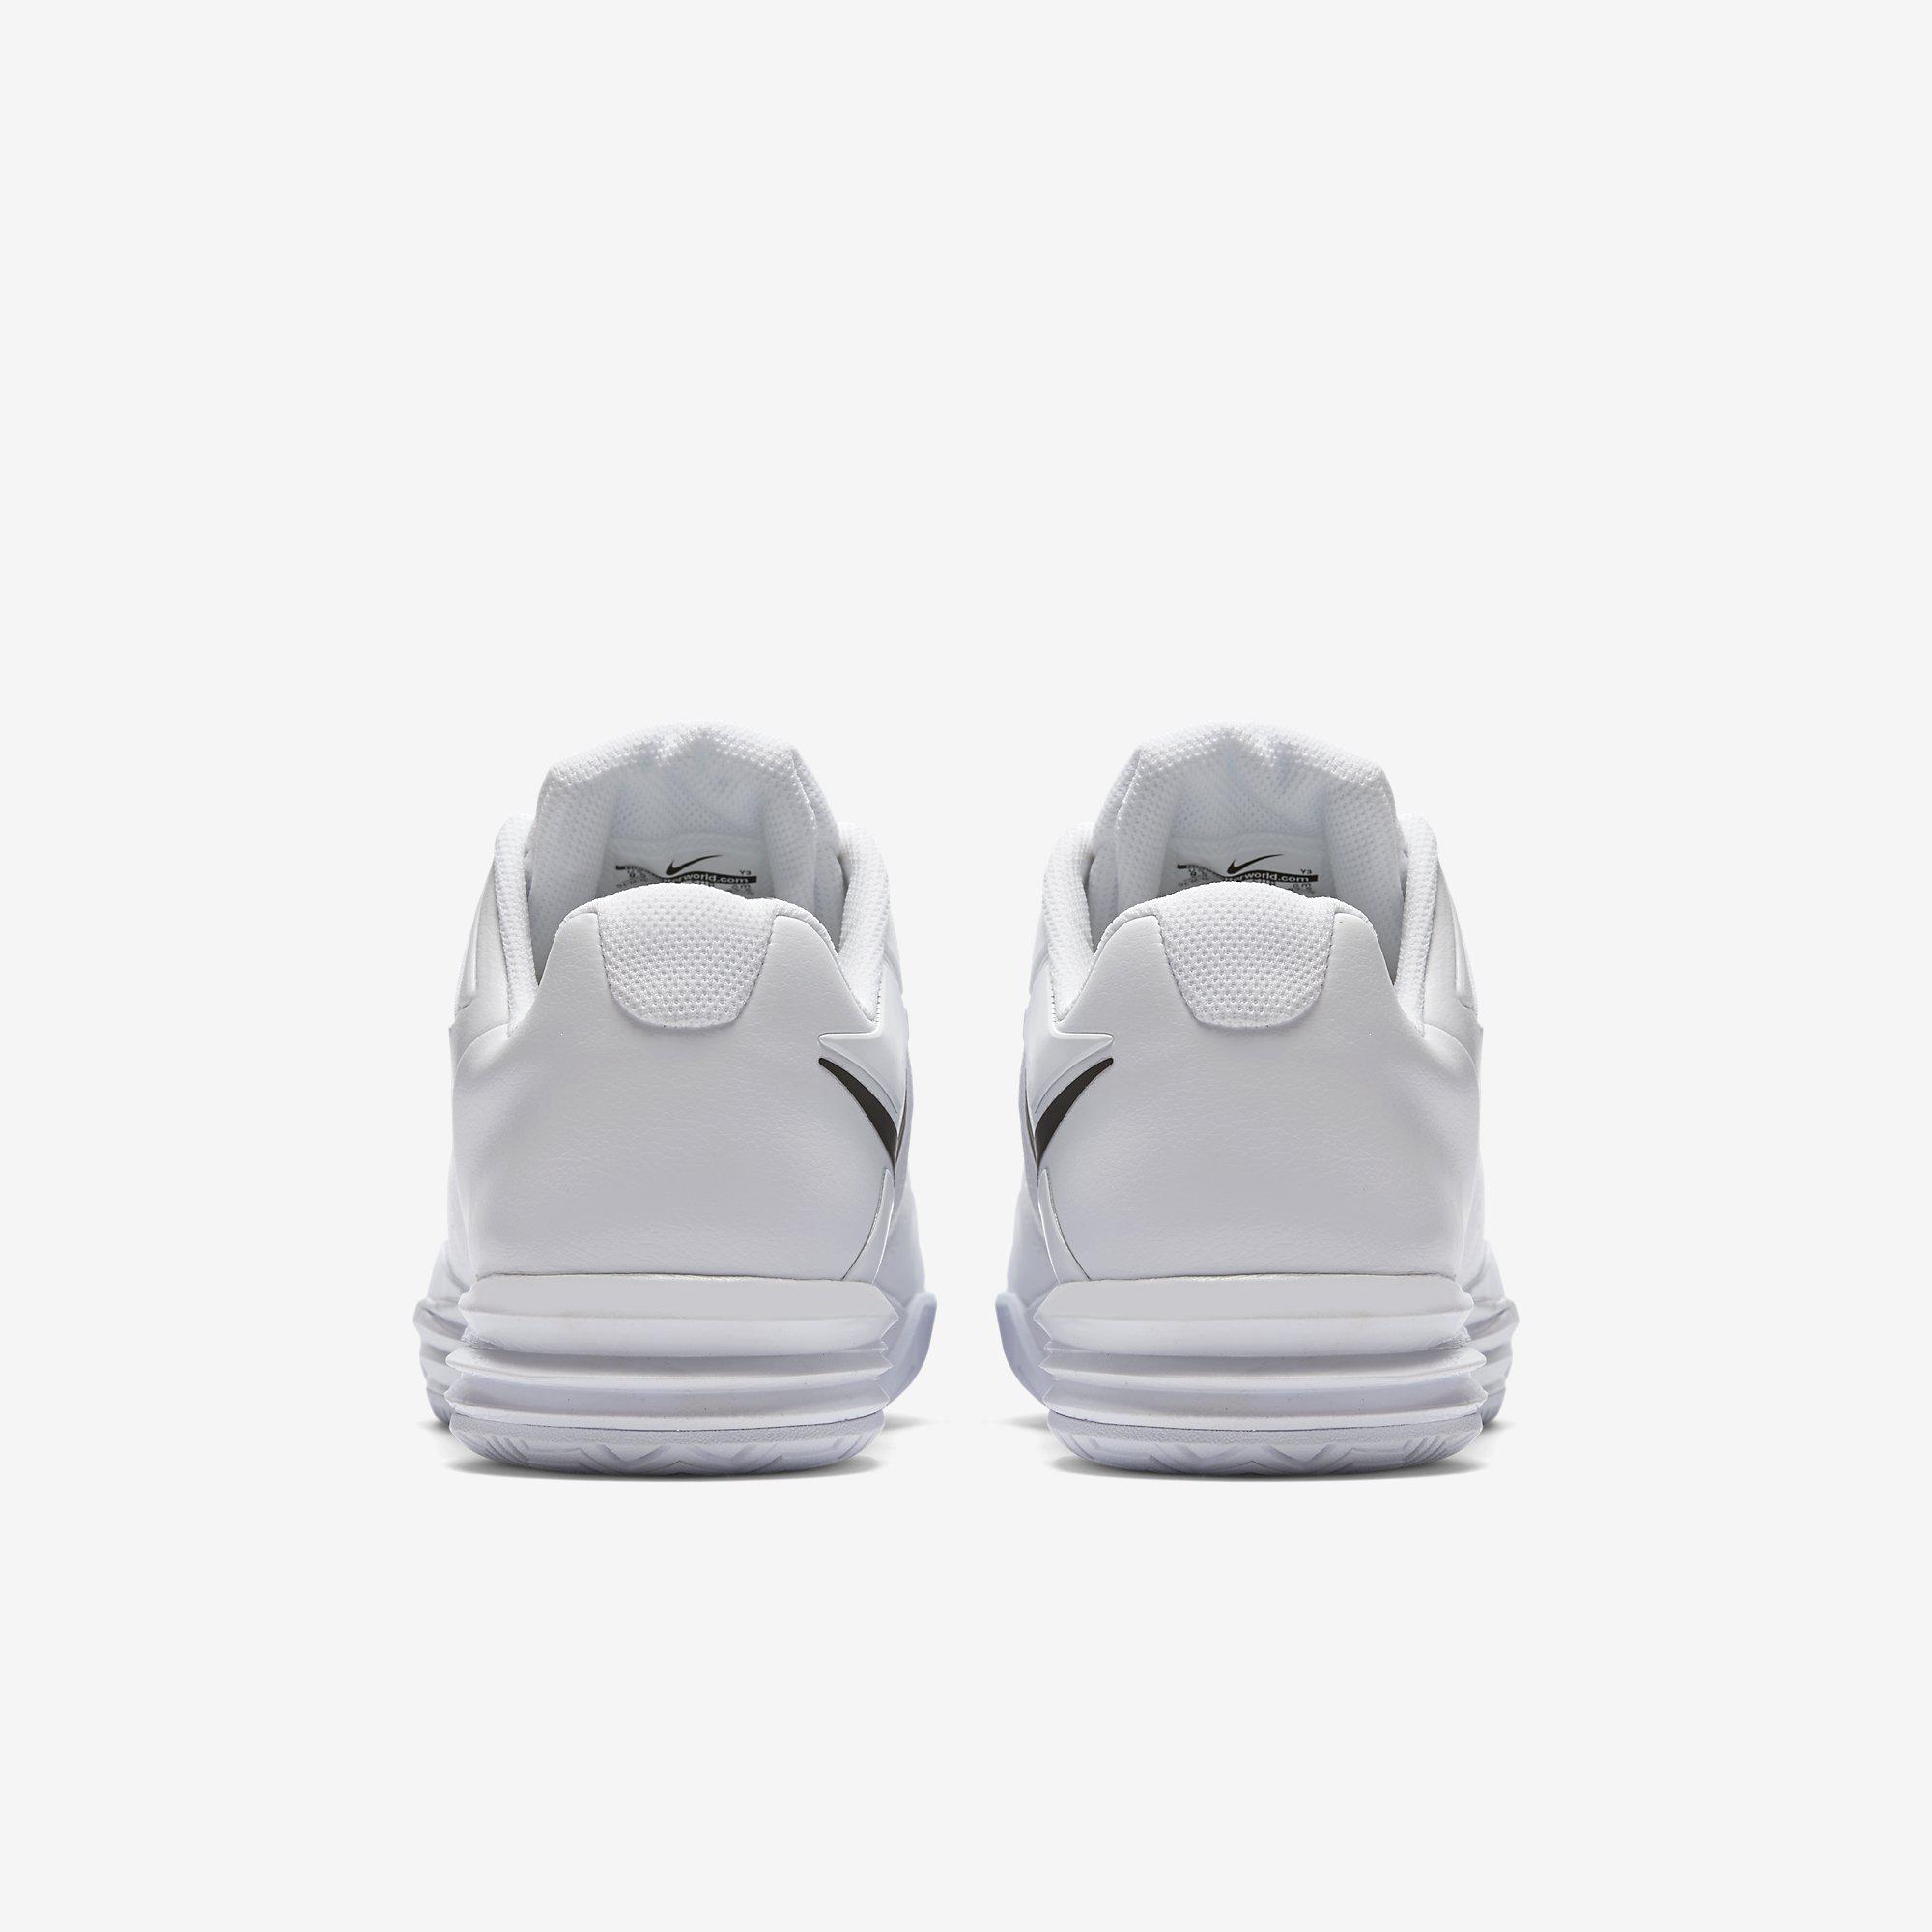 Nike Mens Lunar Ballistec 1.5 Limited Edition Tennis Shoes - White ...